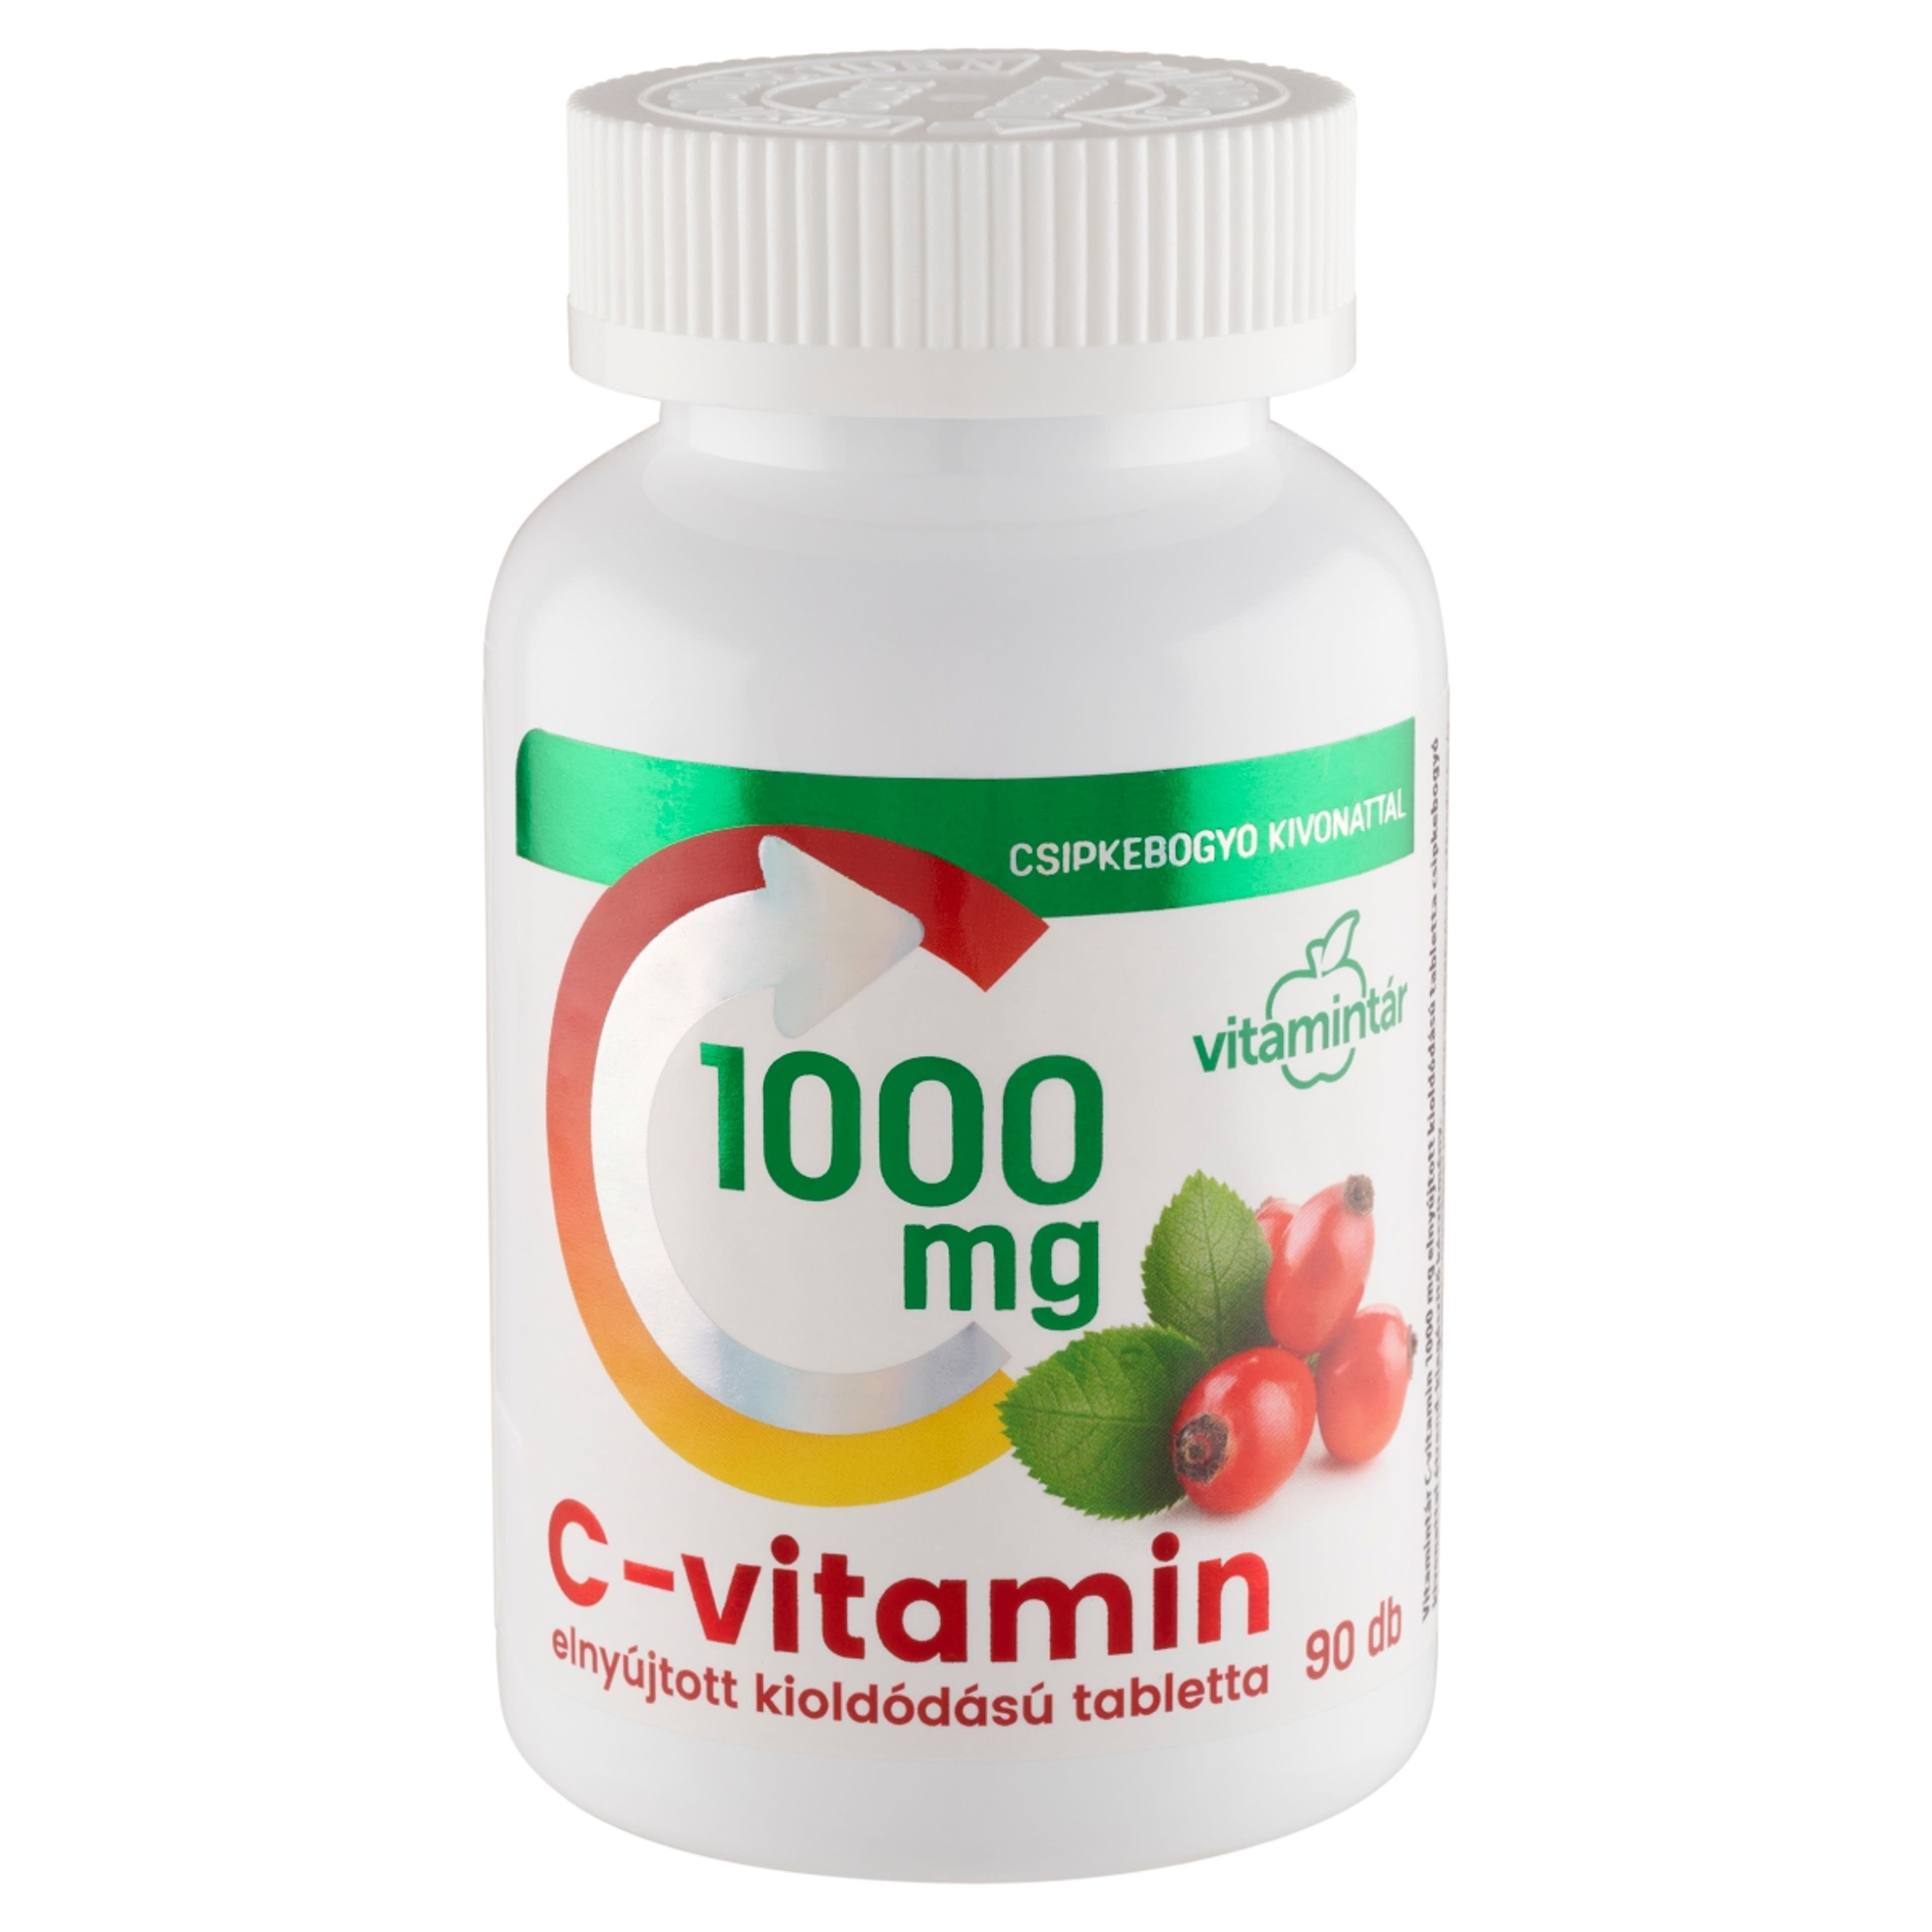 Vitamintár C-Vitamin Csipkebogyó Kivonattal 1000mg Tabletta - 90 db-2